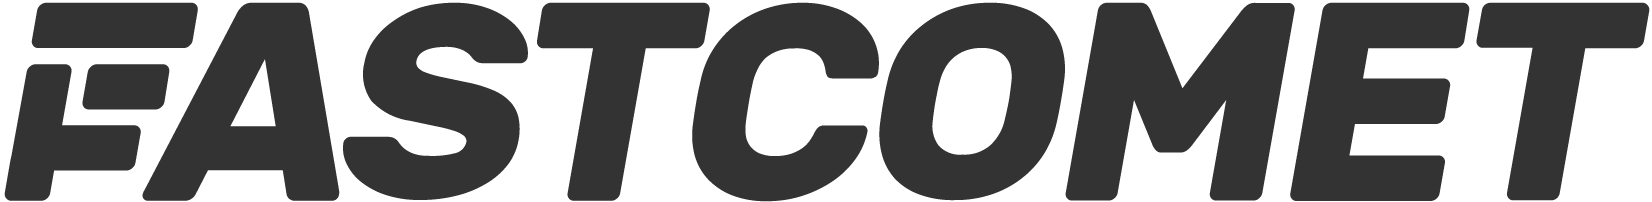 FastComet Logo